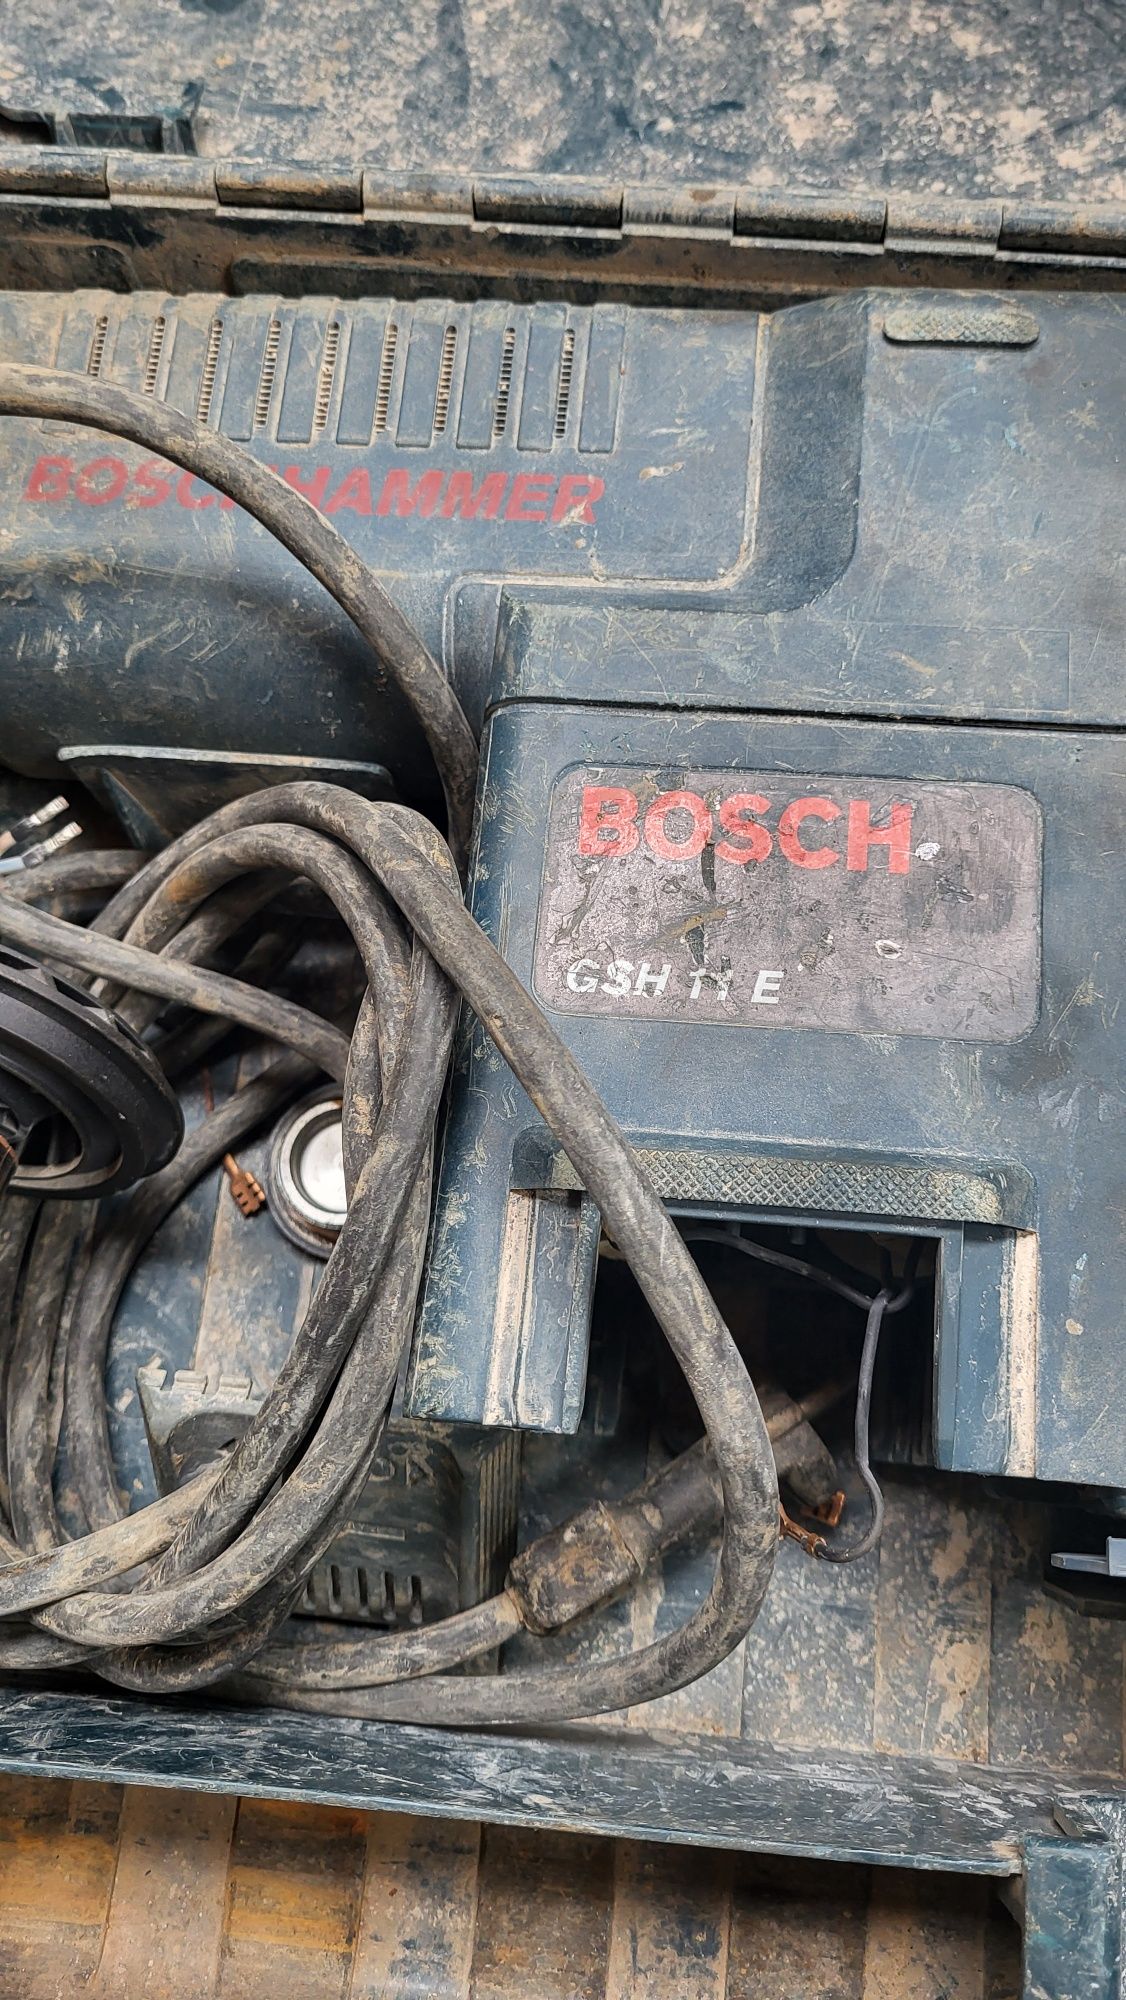 Vînd demolator Bosch gsh 11 e defect  rotorul